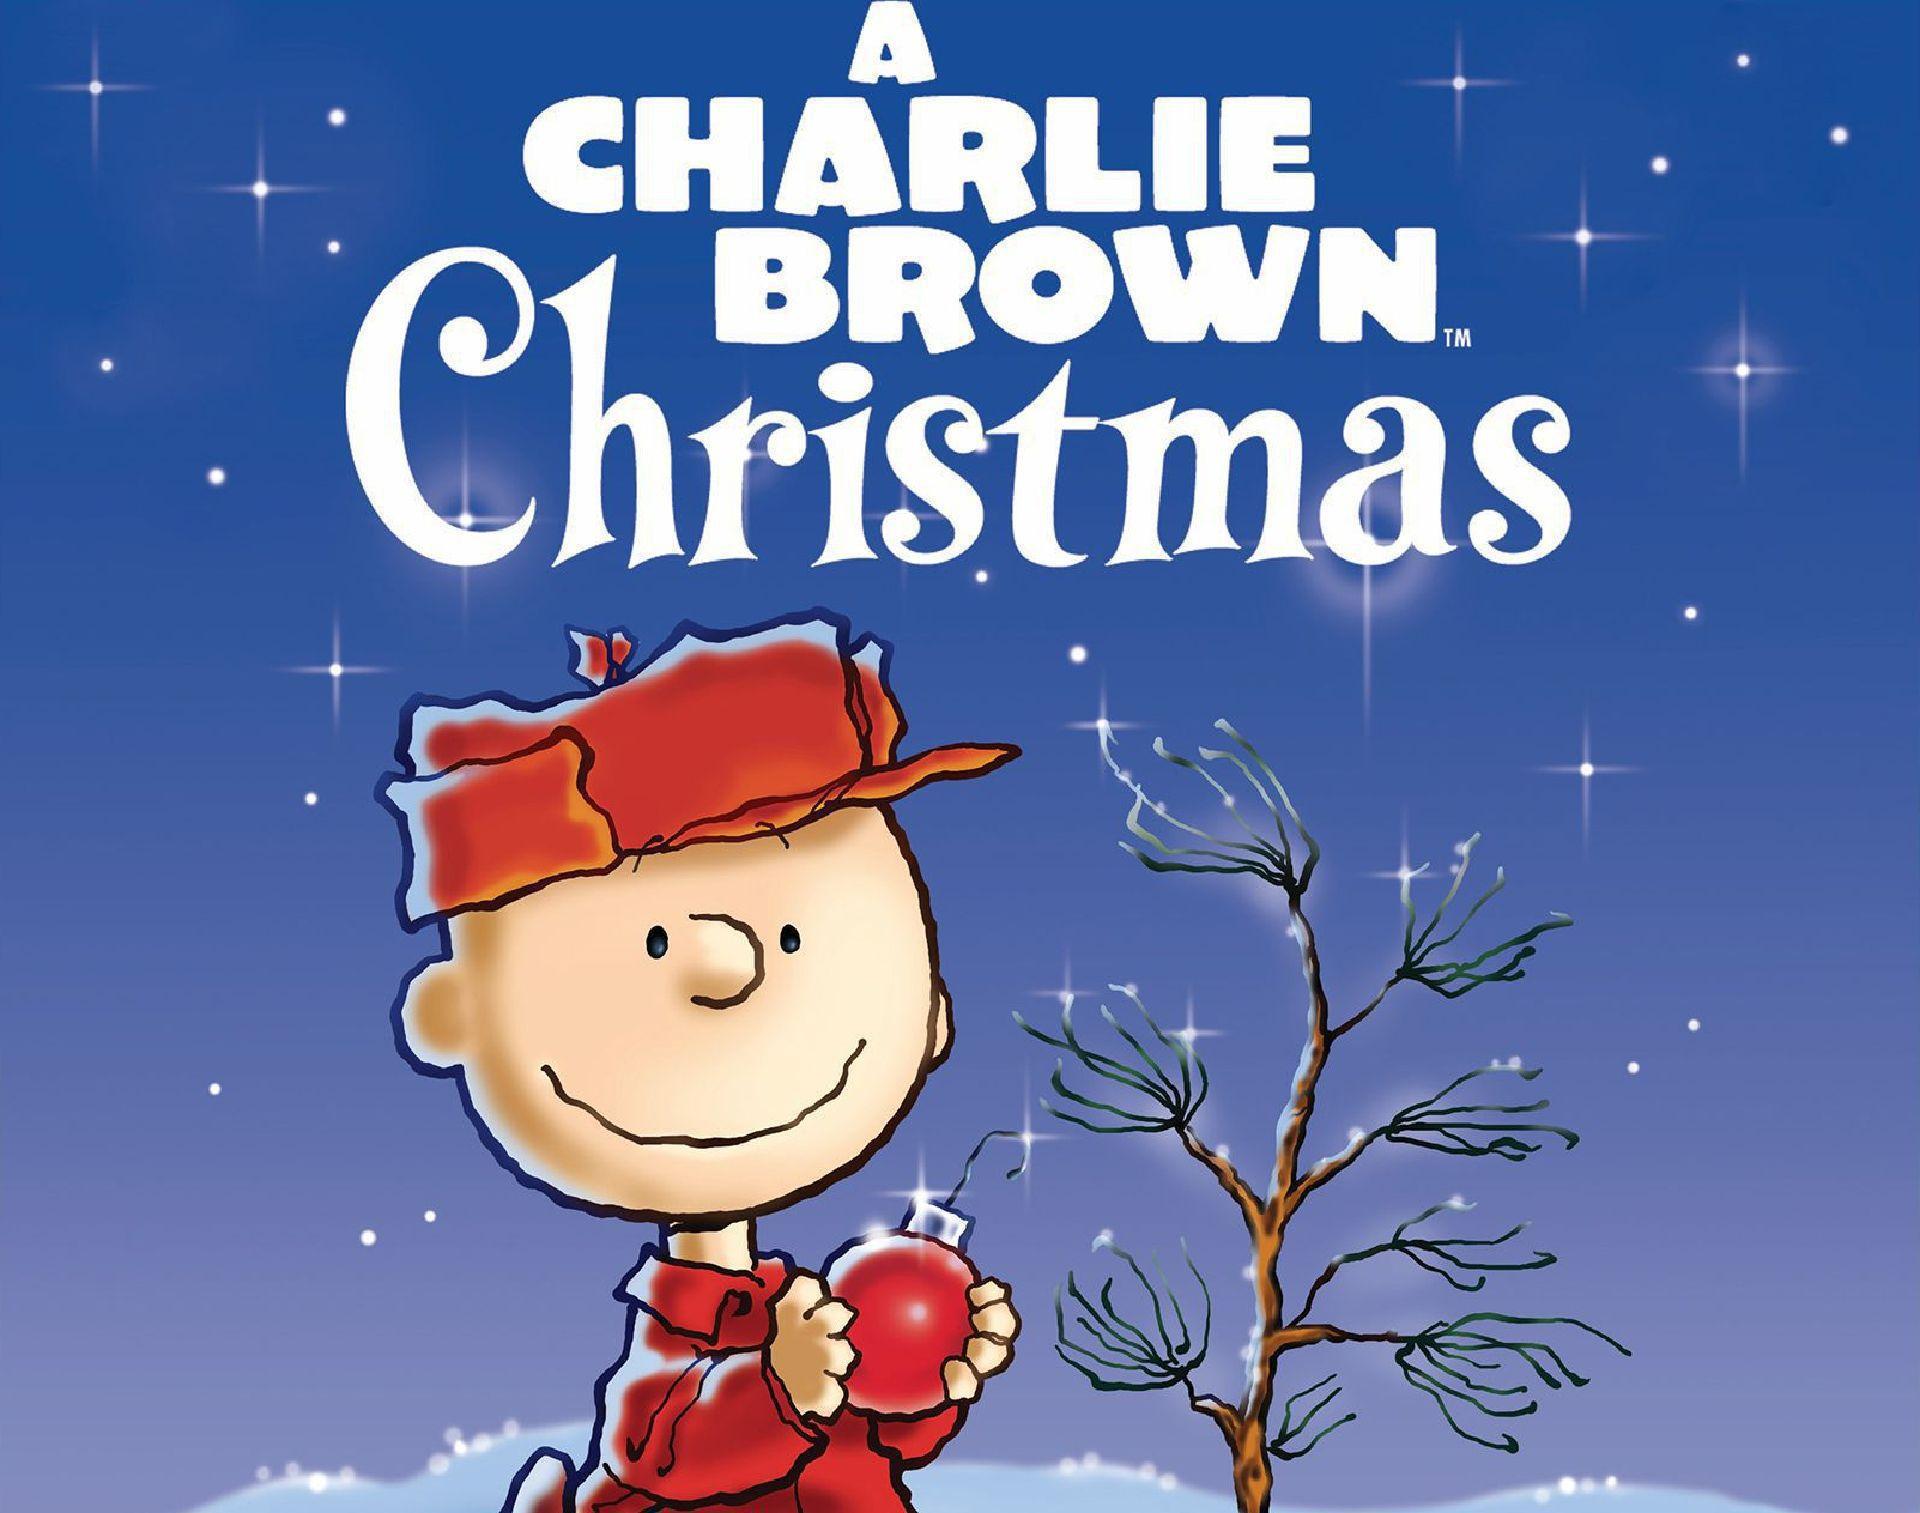 Charlie Brown Christmas Wallpaper Free Charlie Brown